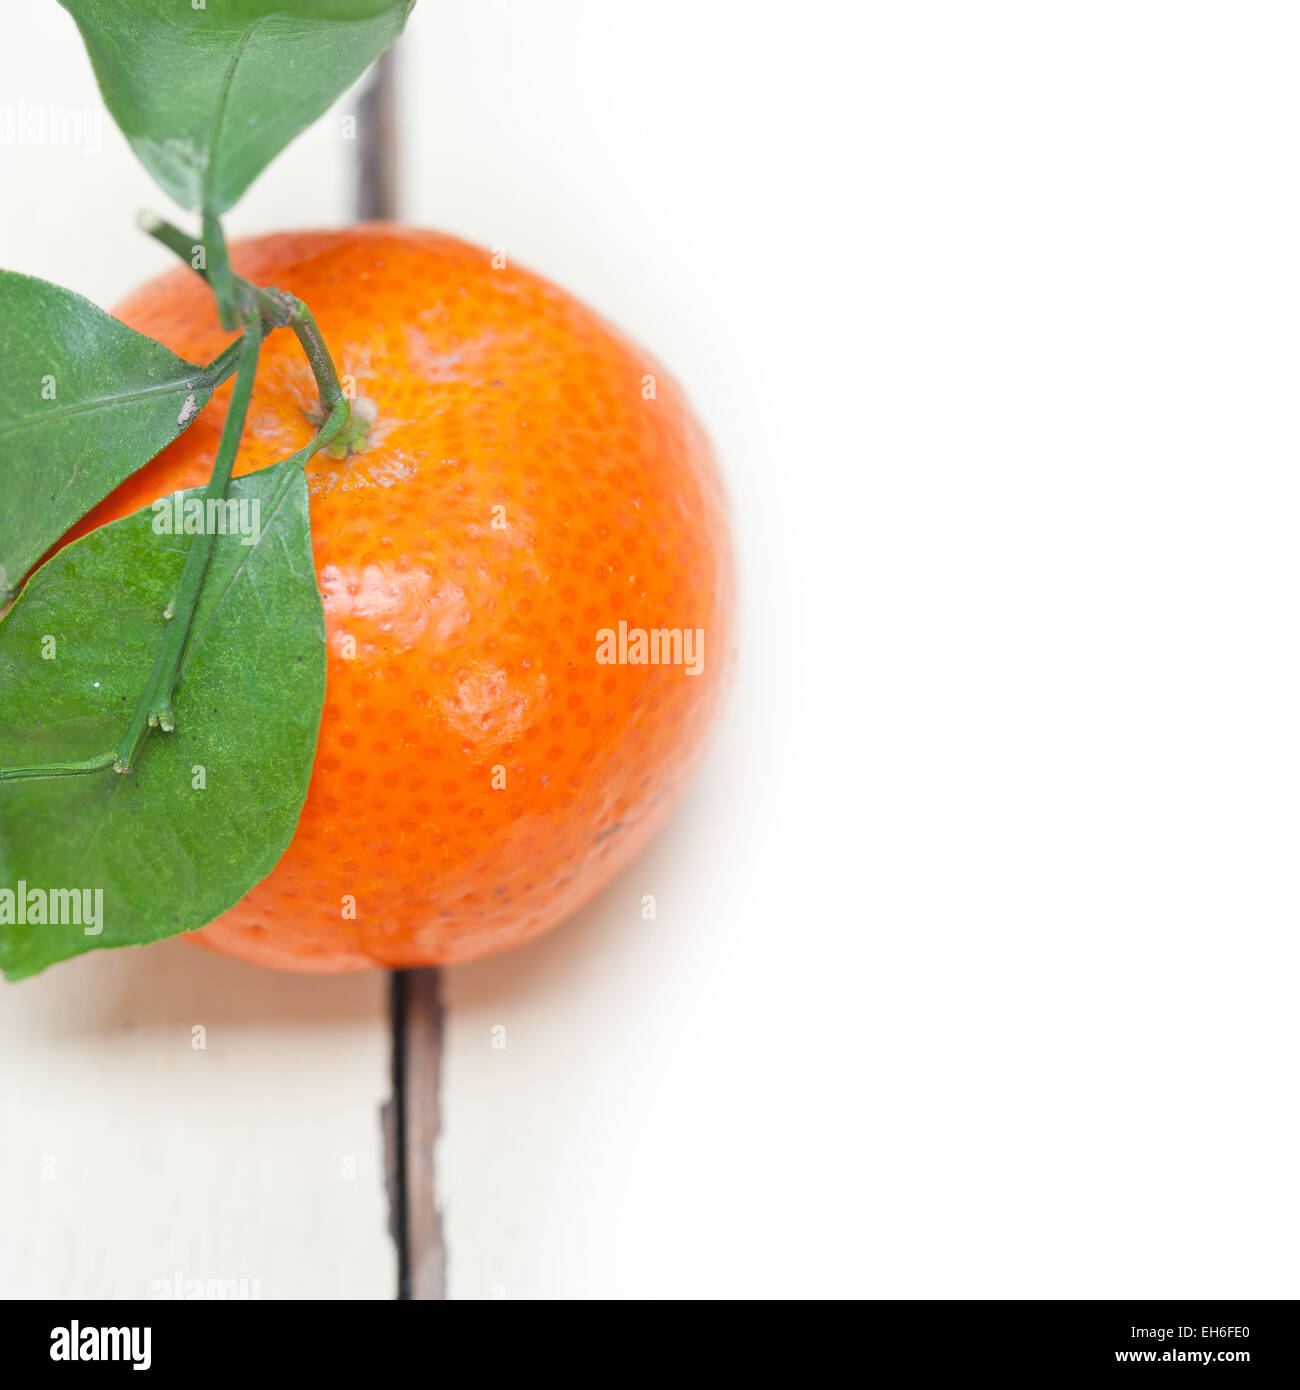 https://c8.alamy.com/comp/EH6FE0/tangerine-mandarin-orange-on-white-rustic-wood-table-EH6FE0.jpg